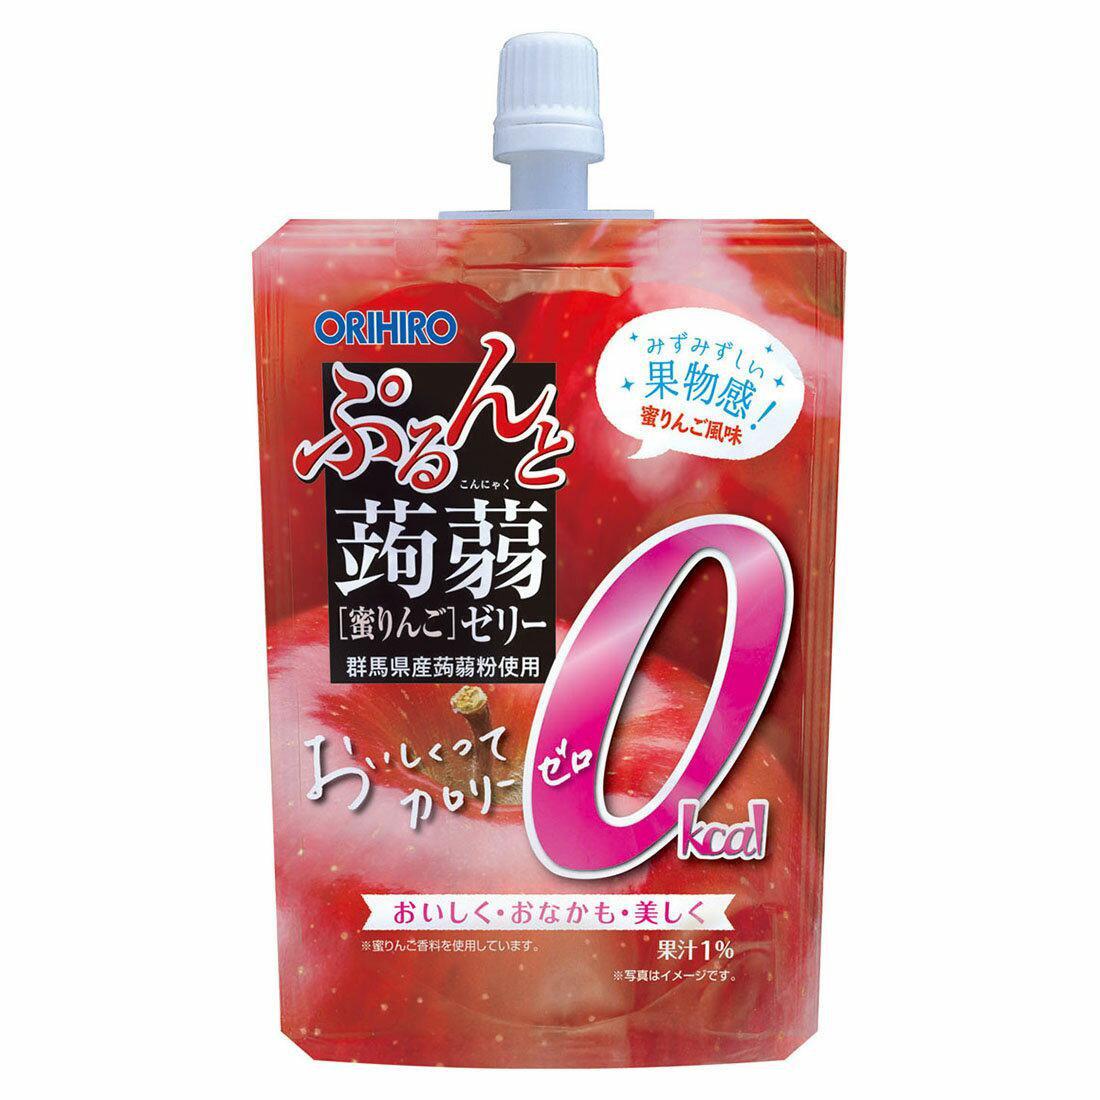 Orihiro Drinkable Konjac Jelly Calorie Free Diet Supplement Apple Flavor 130g